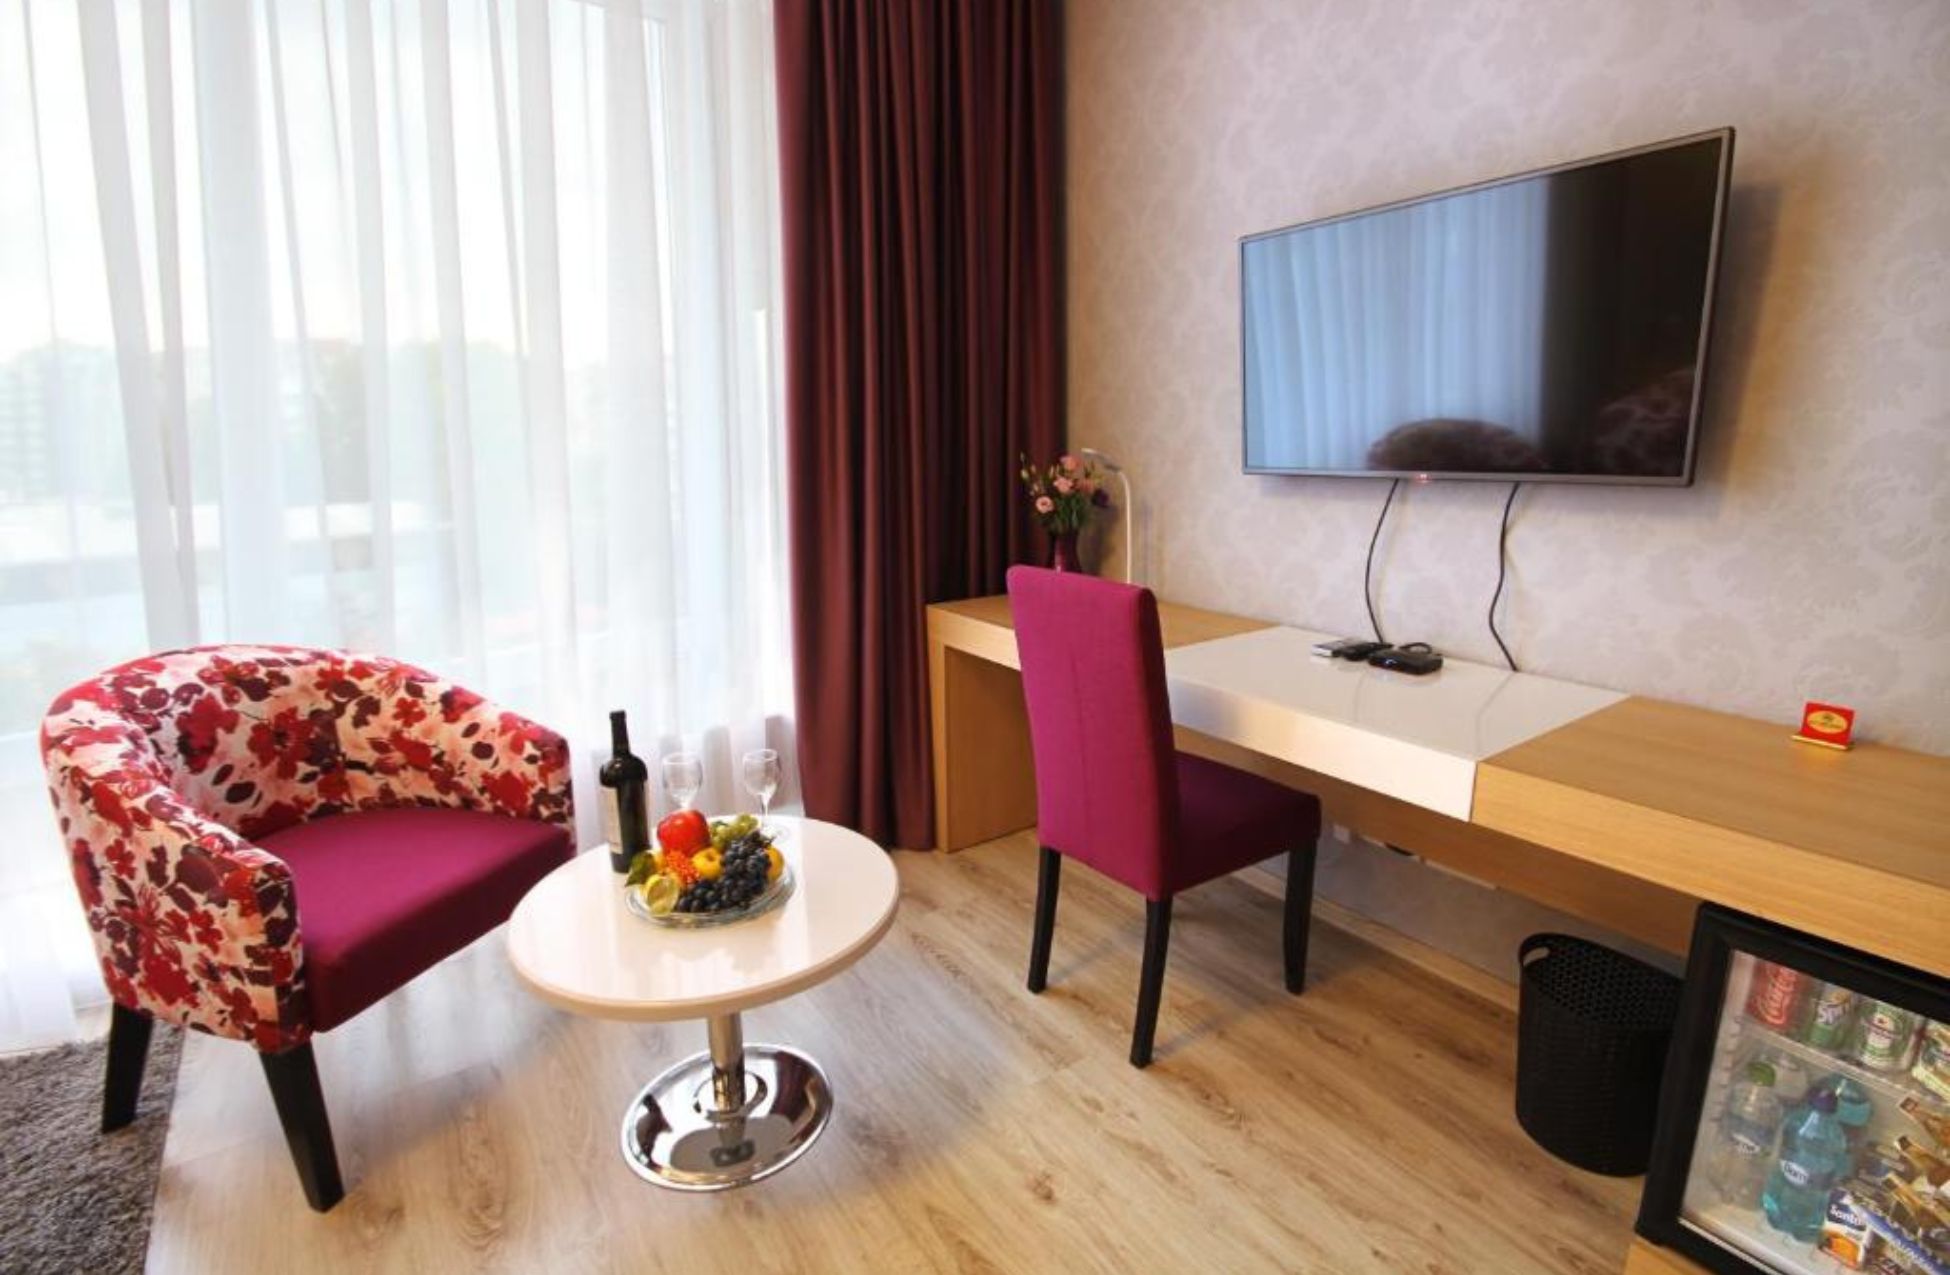 City Park Hotel - Best Hotels In Chisinau